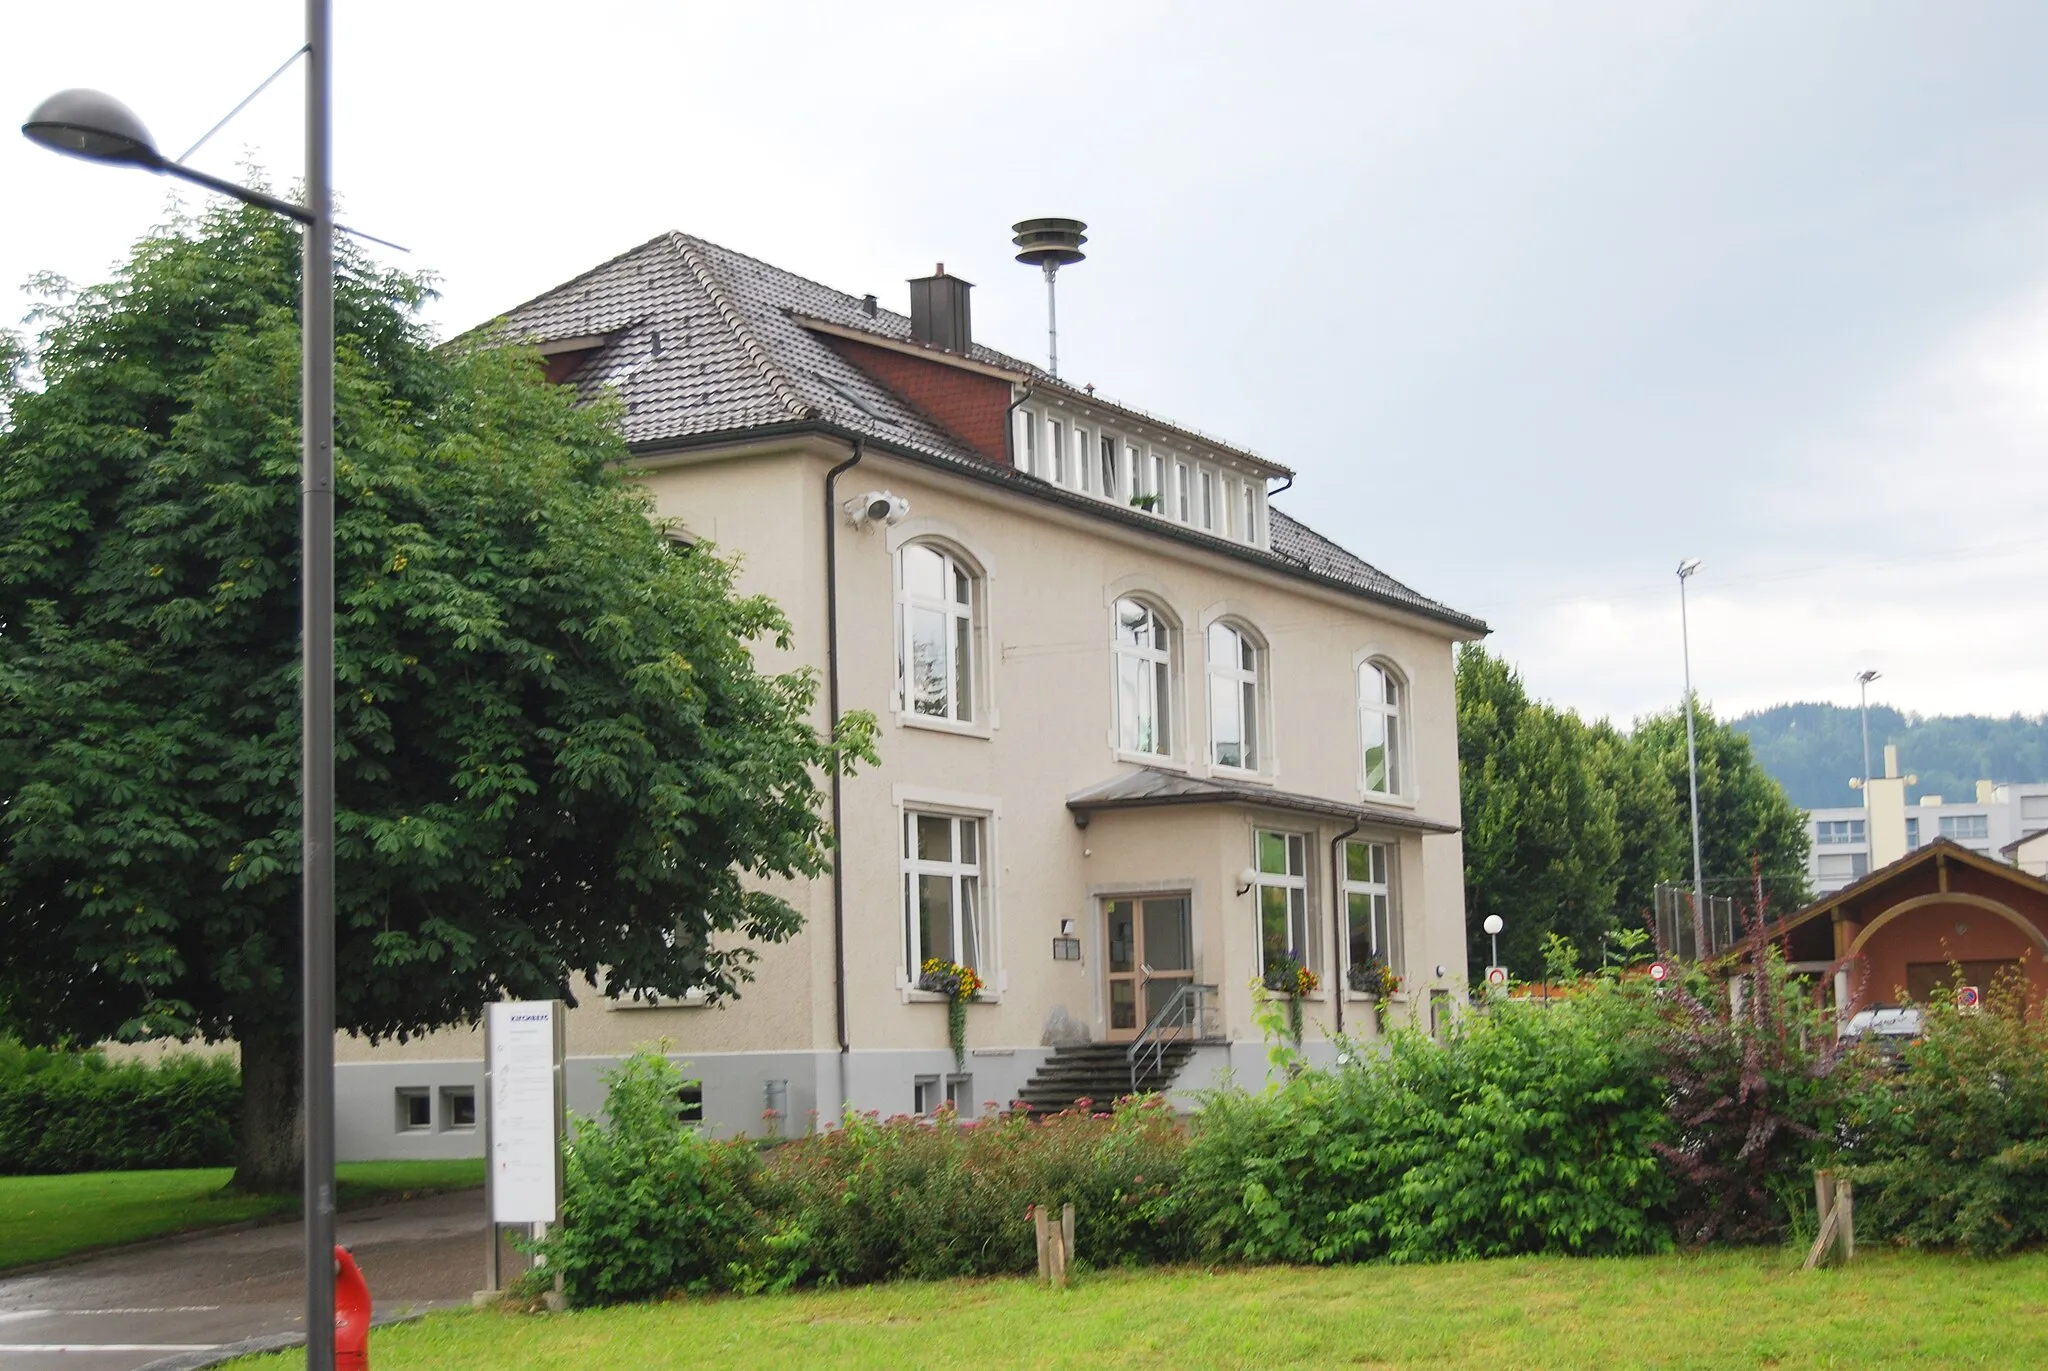 Photo showing: Bazenheid, municipality of Kirchberg, canton of St. Gallen, Switzerland